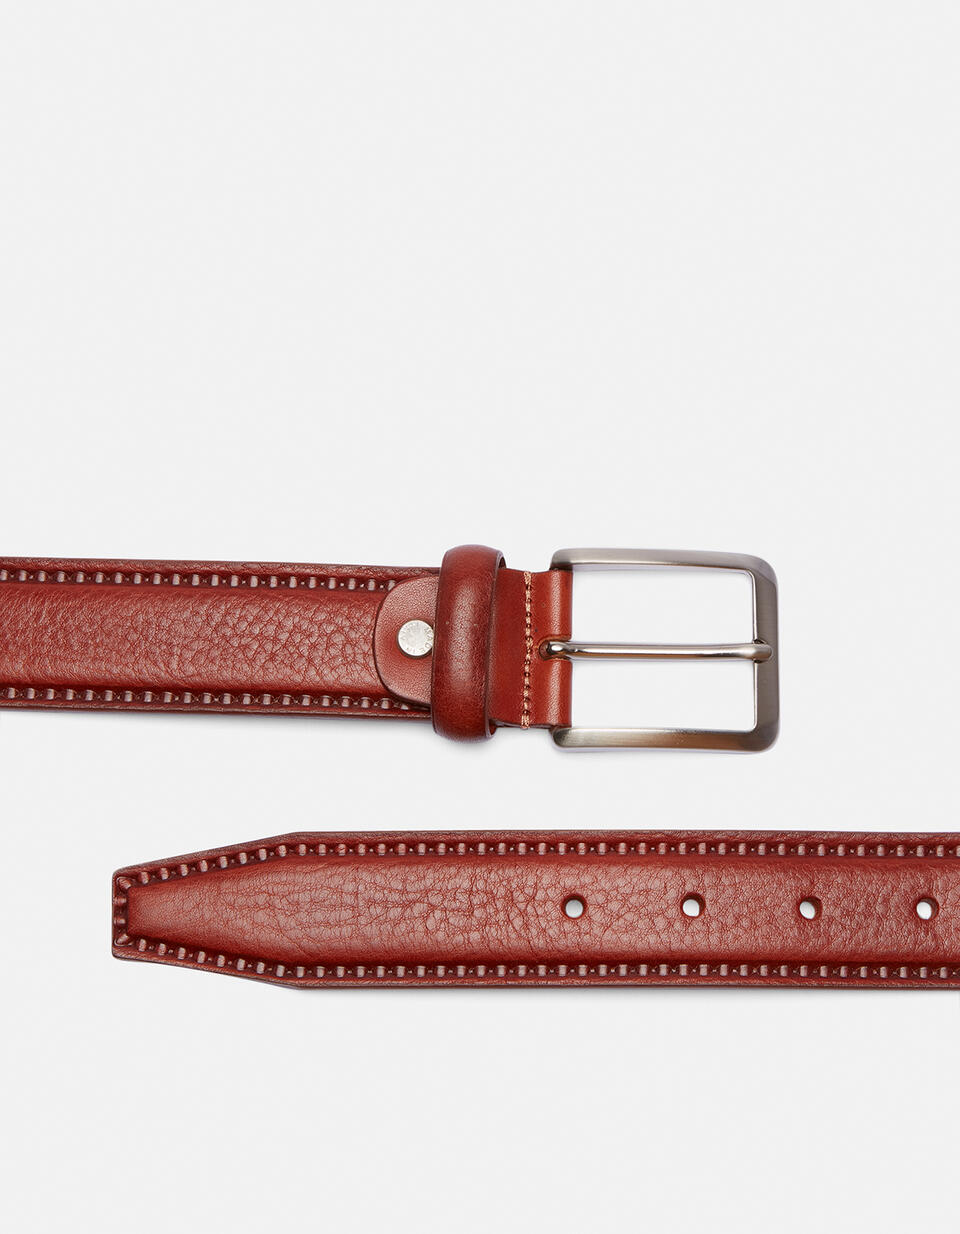 Cintura Classica in pelle con cucitura a contrasto Marrone  - Cinture Uomo - Cinture - Cuoieria Fiorentina